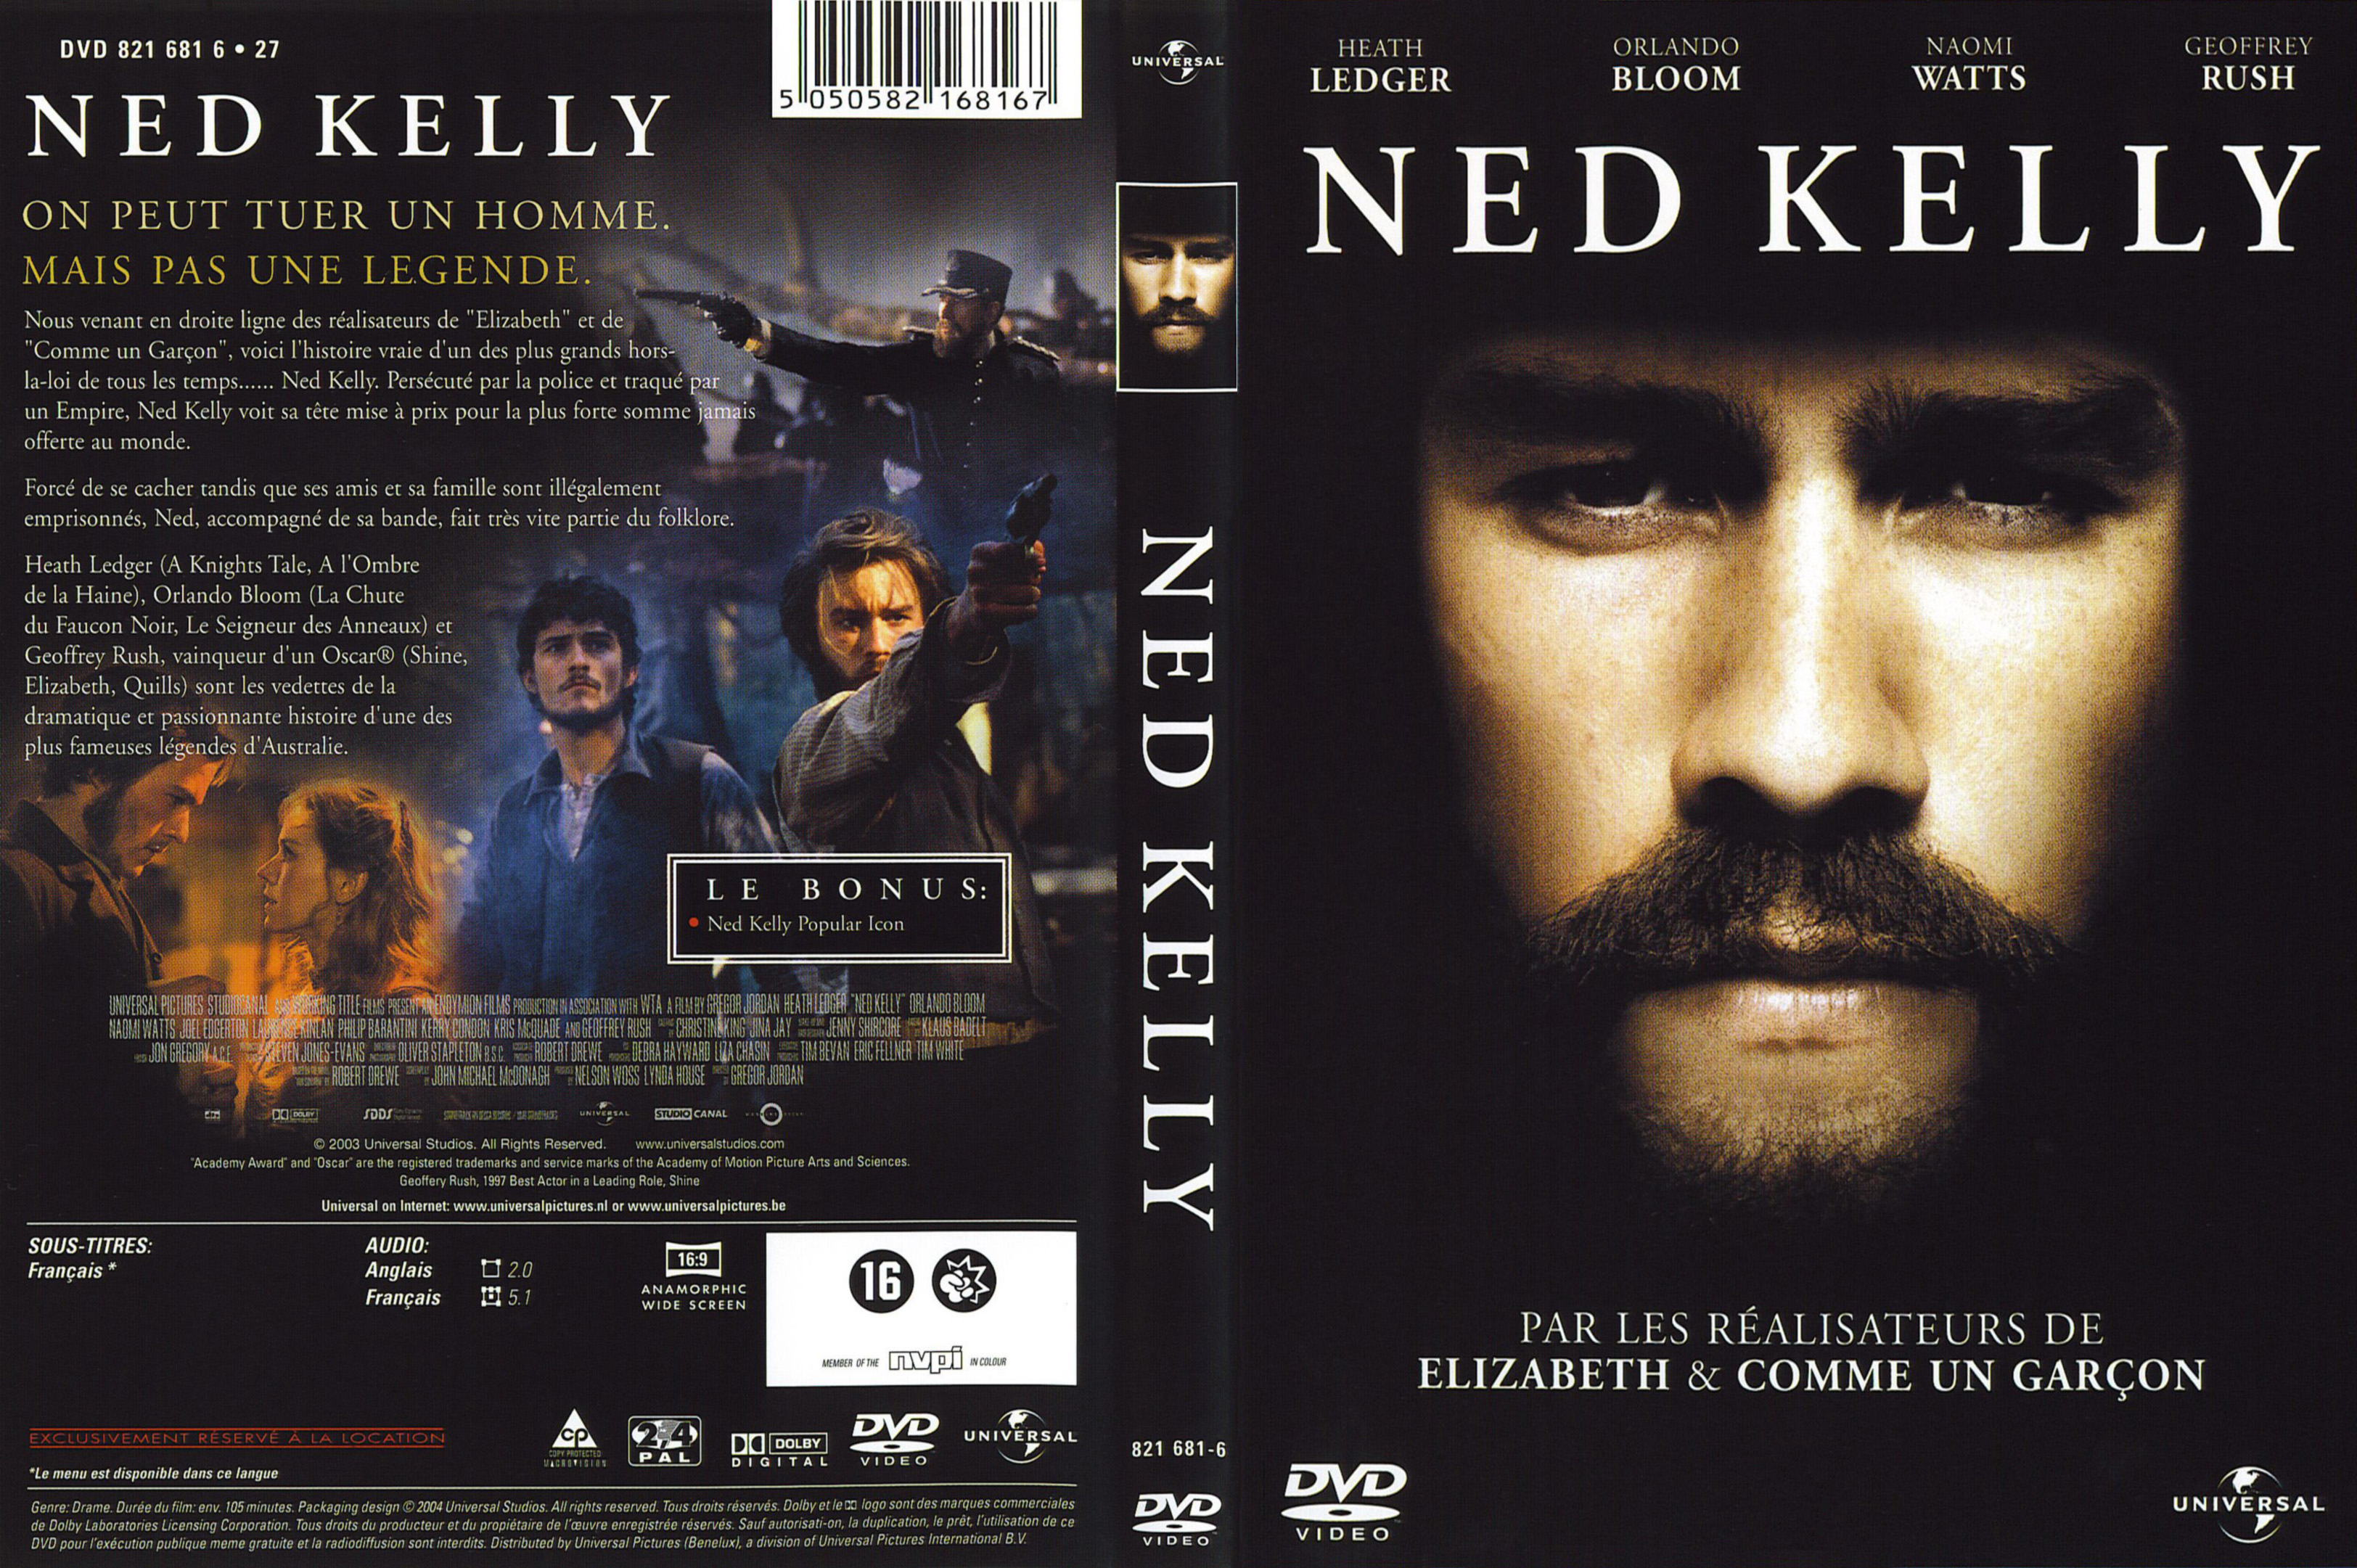 Jaquette DVD Ned Kelly v2